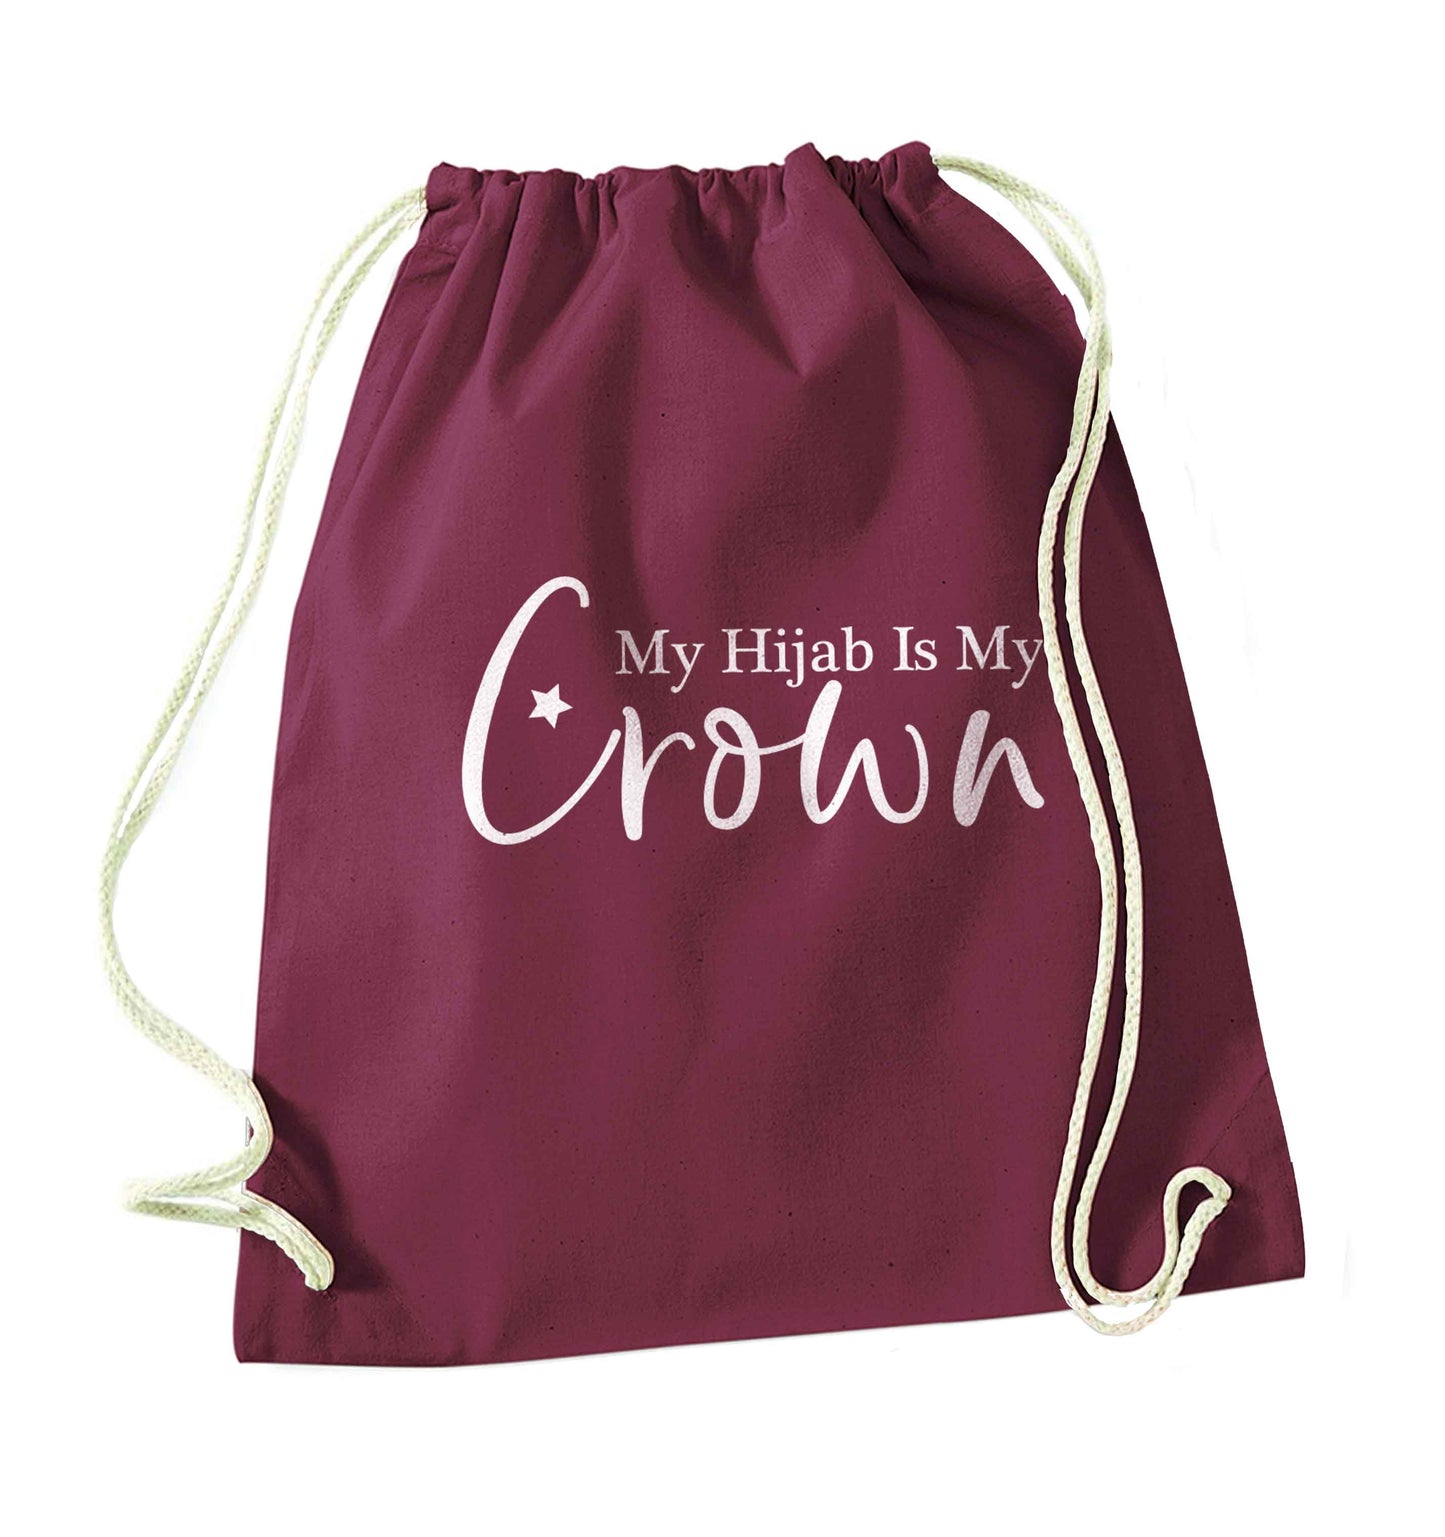 My hijab is my crown maroon drawstring bag